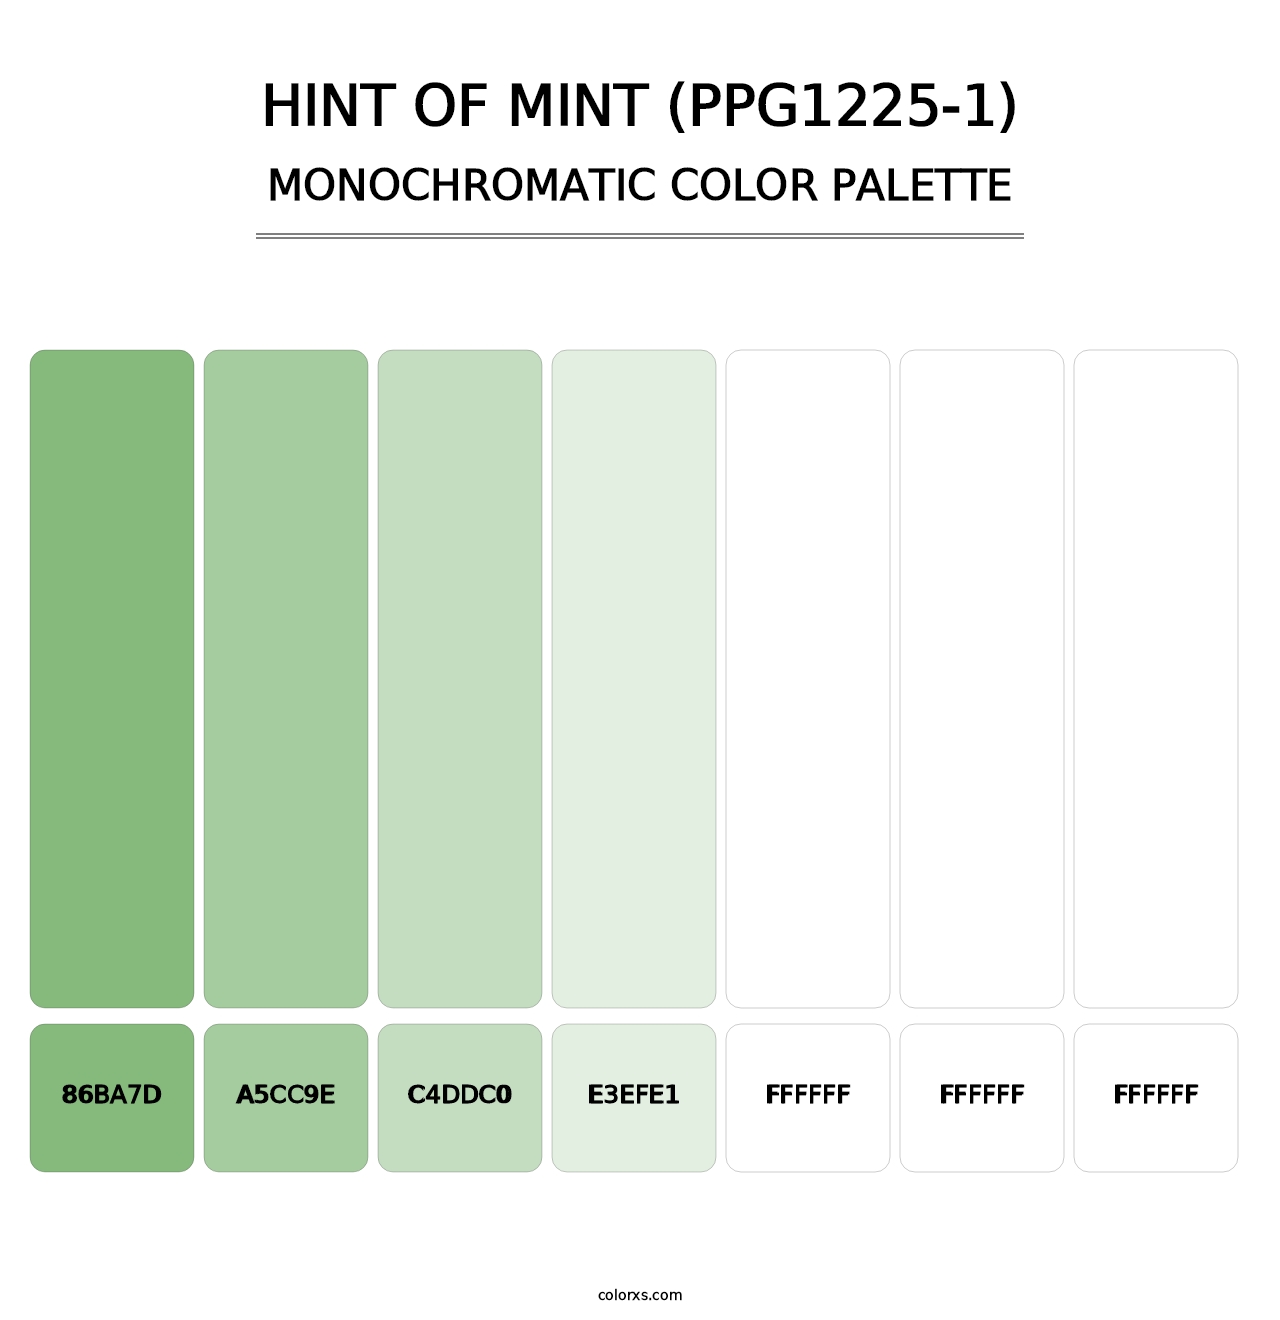 Hint Of Mint (PPG1225-1) - Monochromatic Color Palette